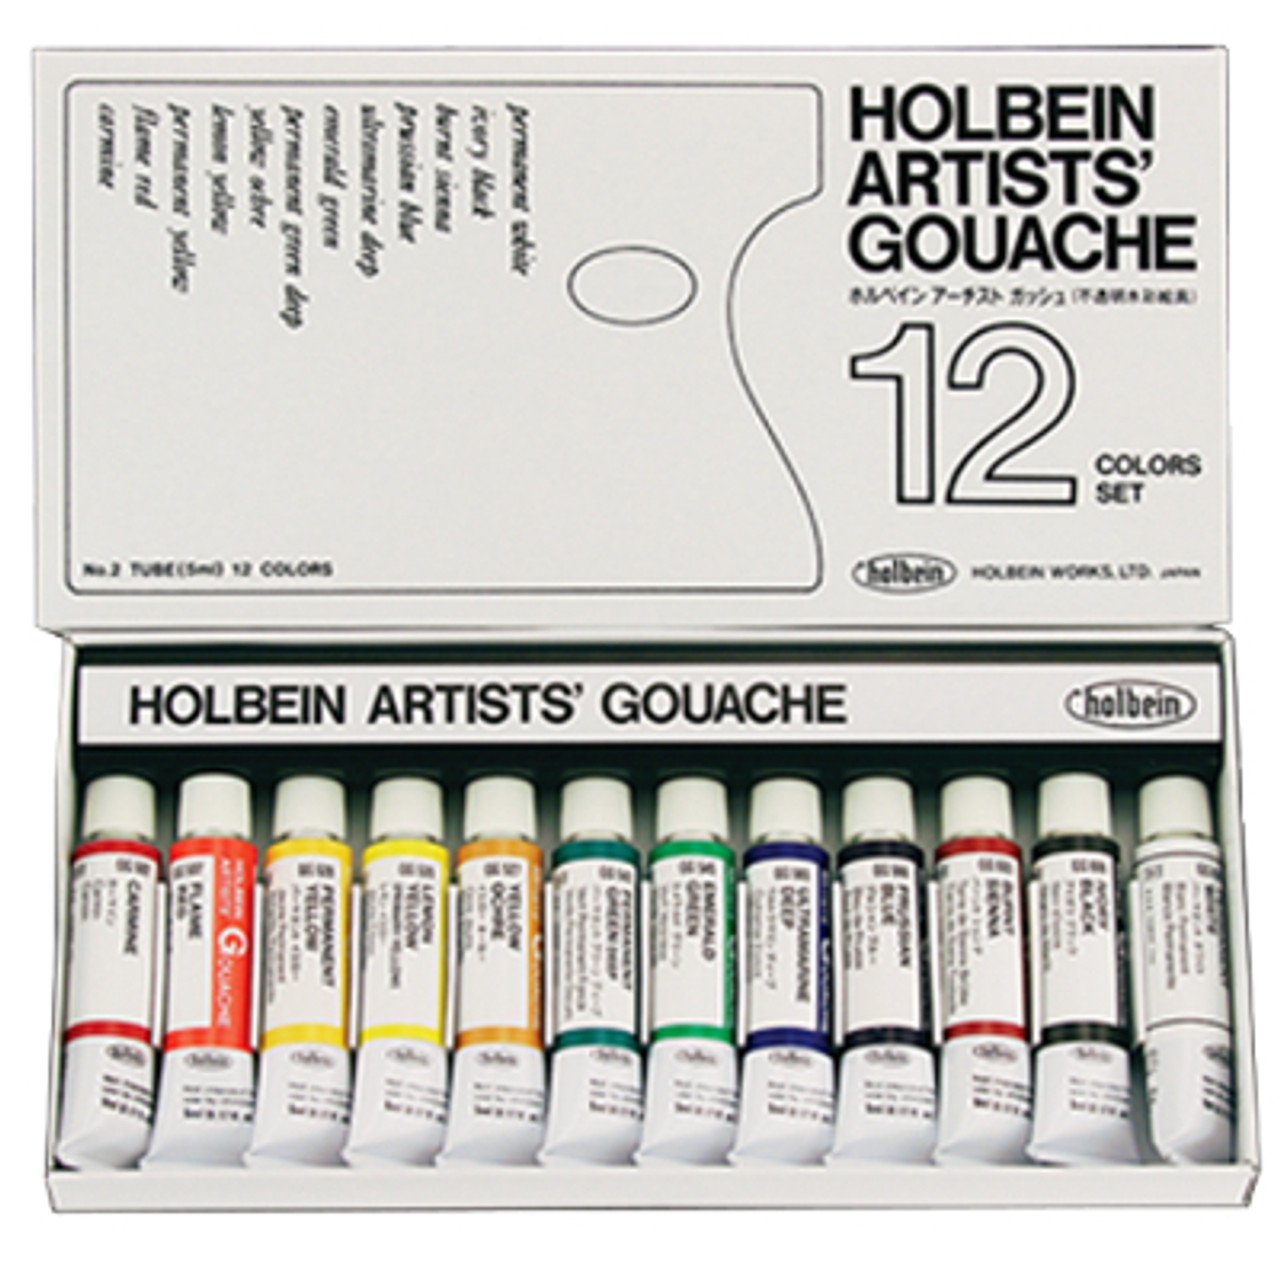 12 Assorted Colors Gouache Paint Tube Set for Guinea